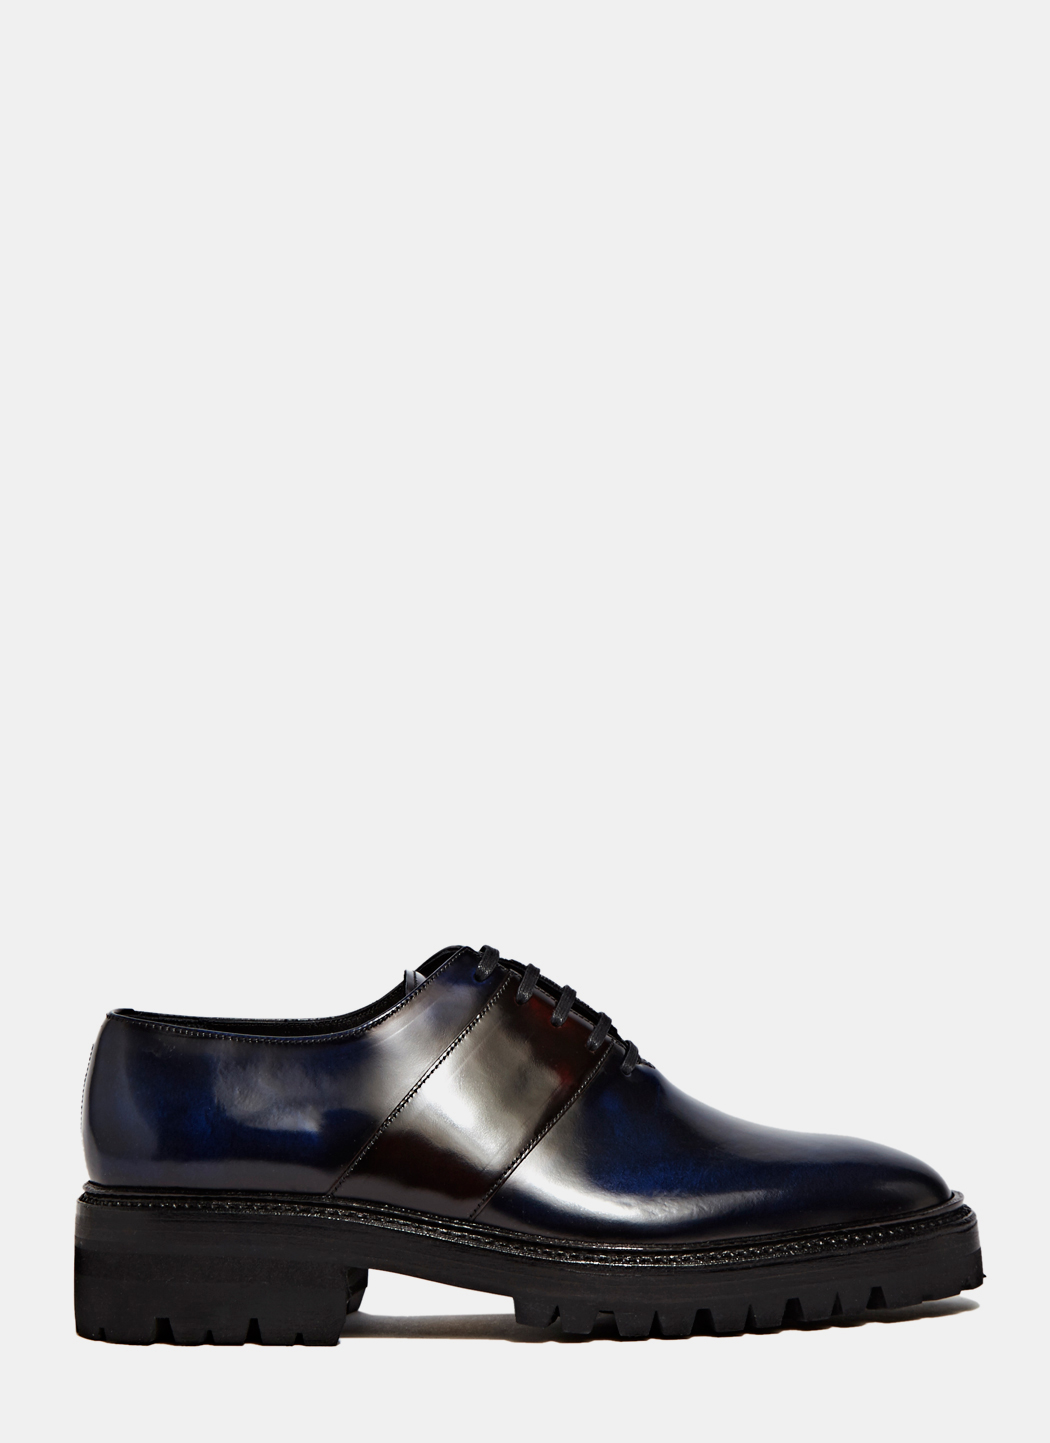 Yang Li Classic Oxford Shoes | LN-CC